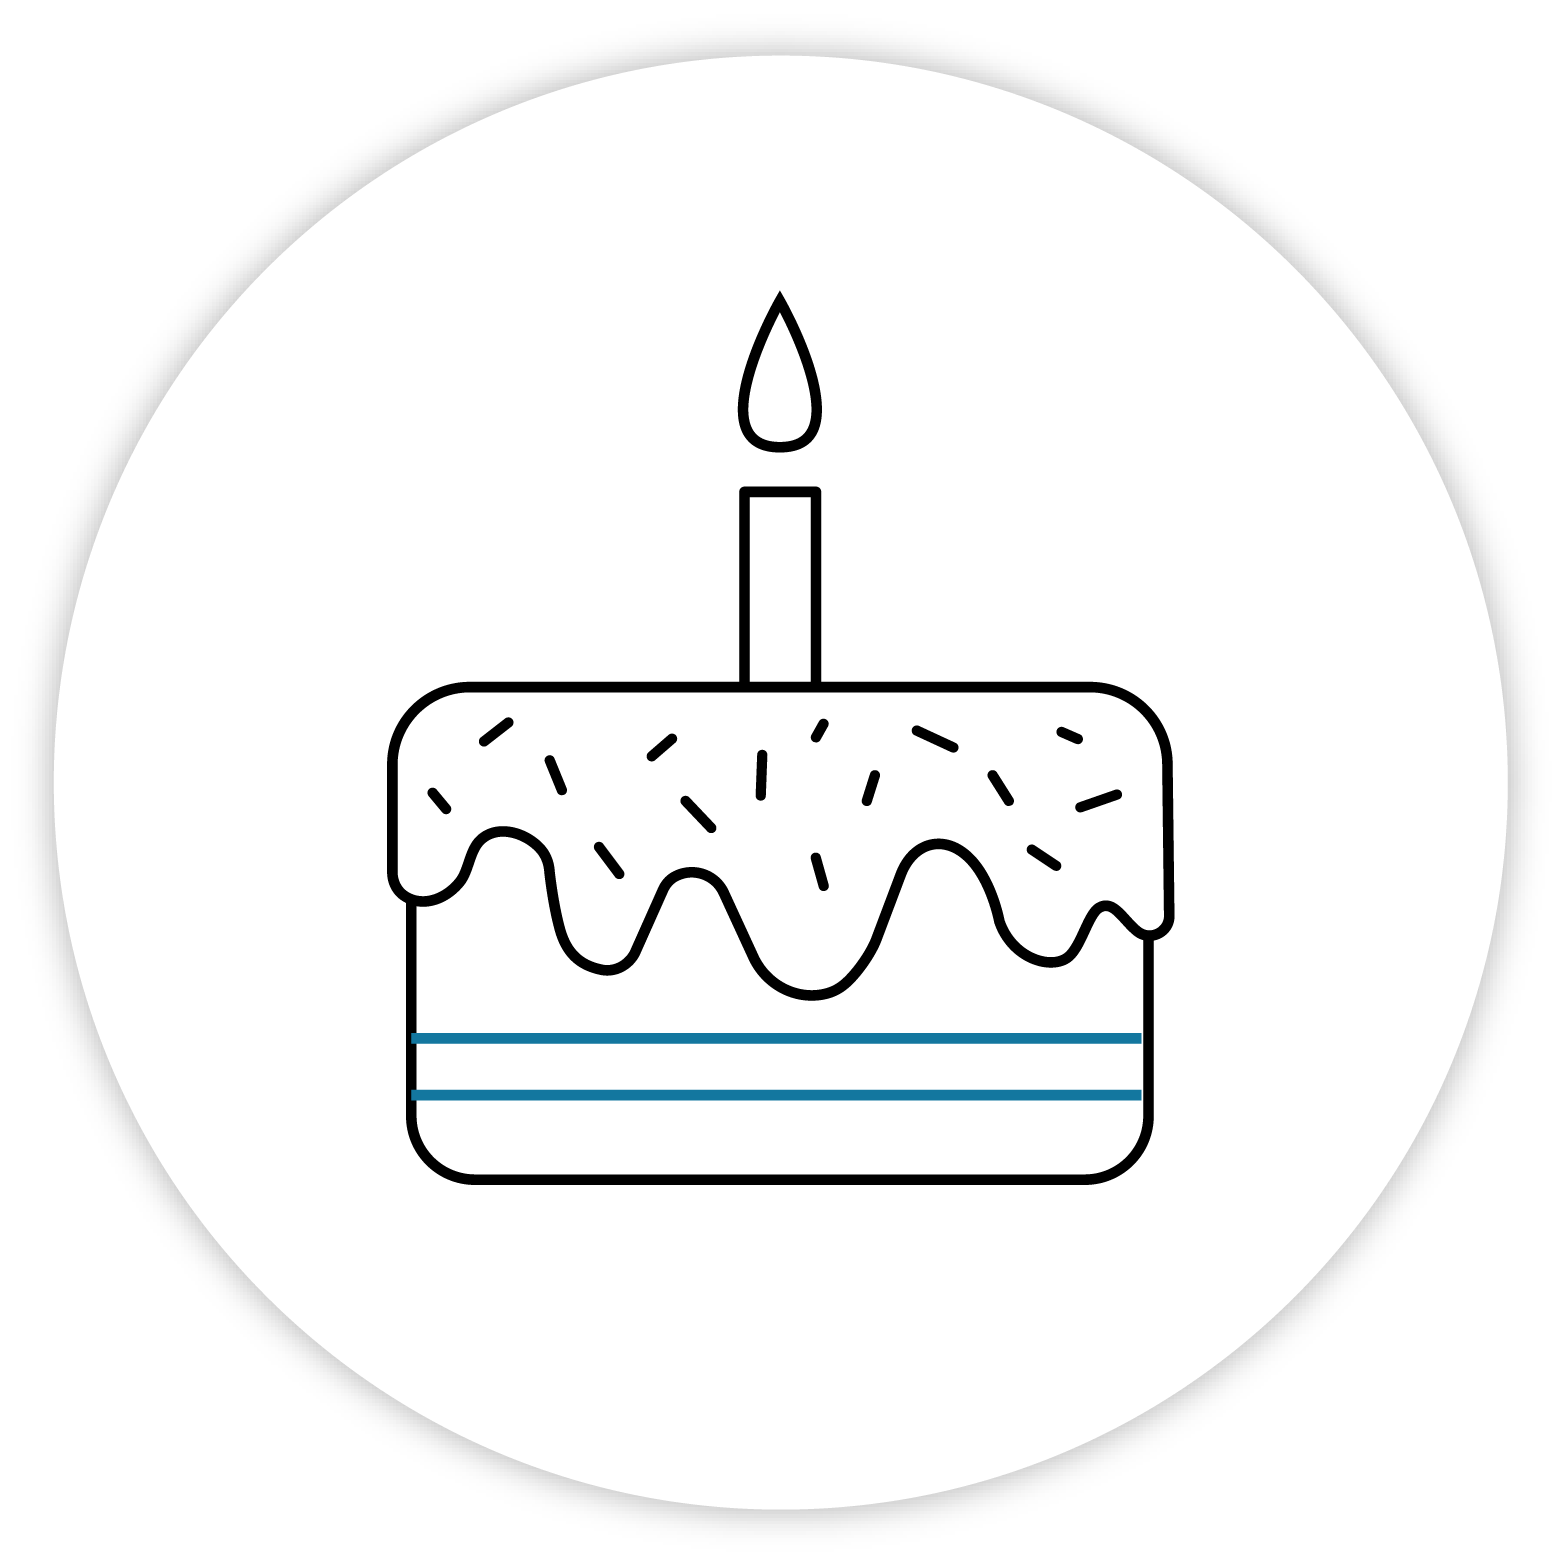 Birthday Gift Icon